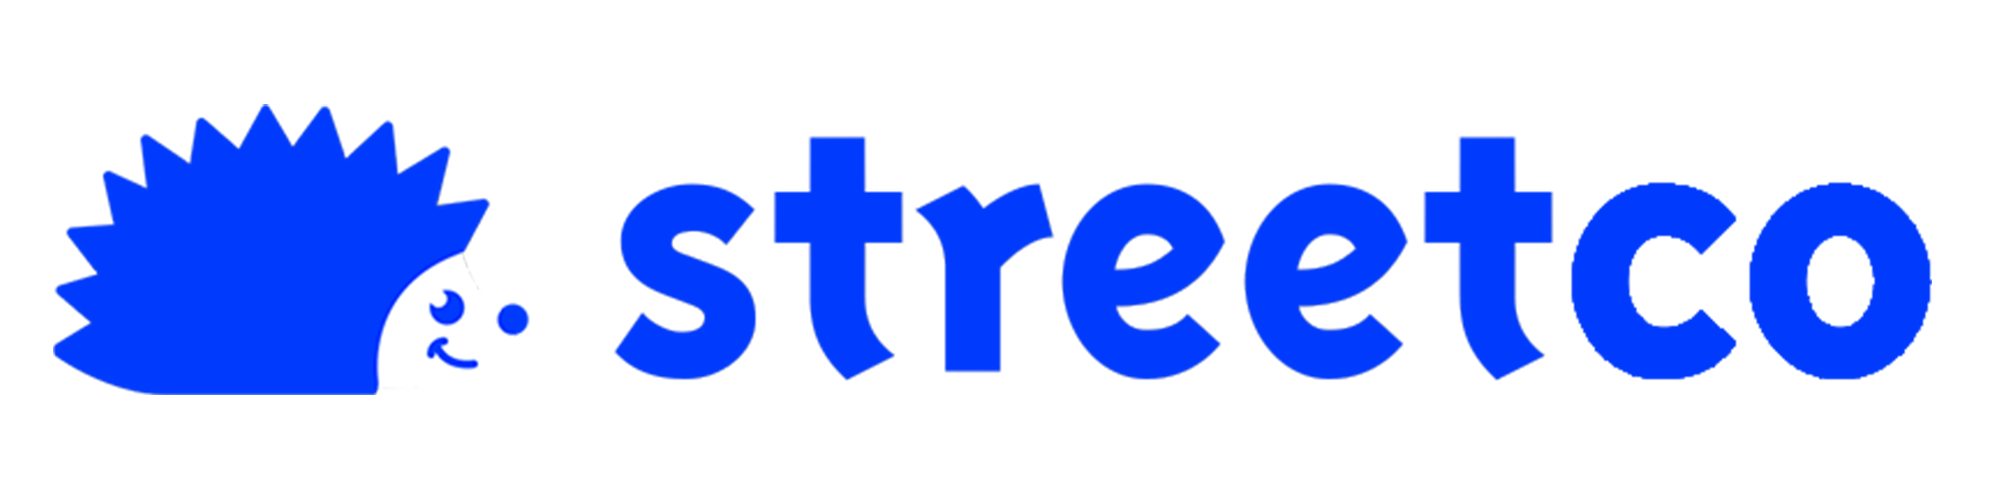 Streeco_logo